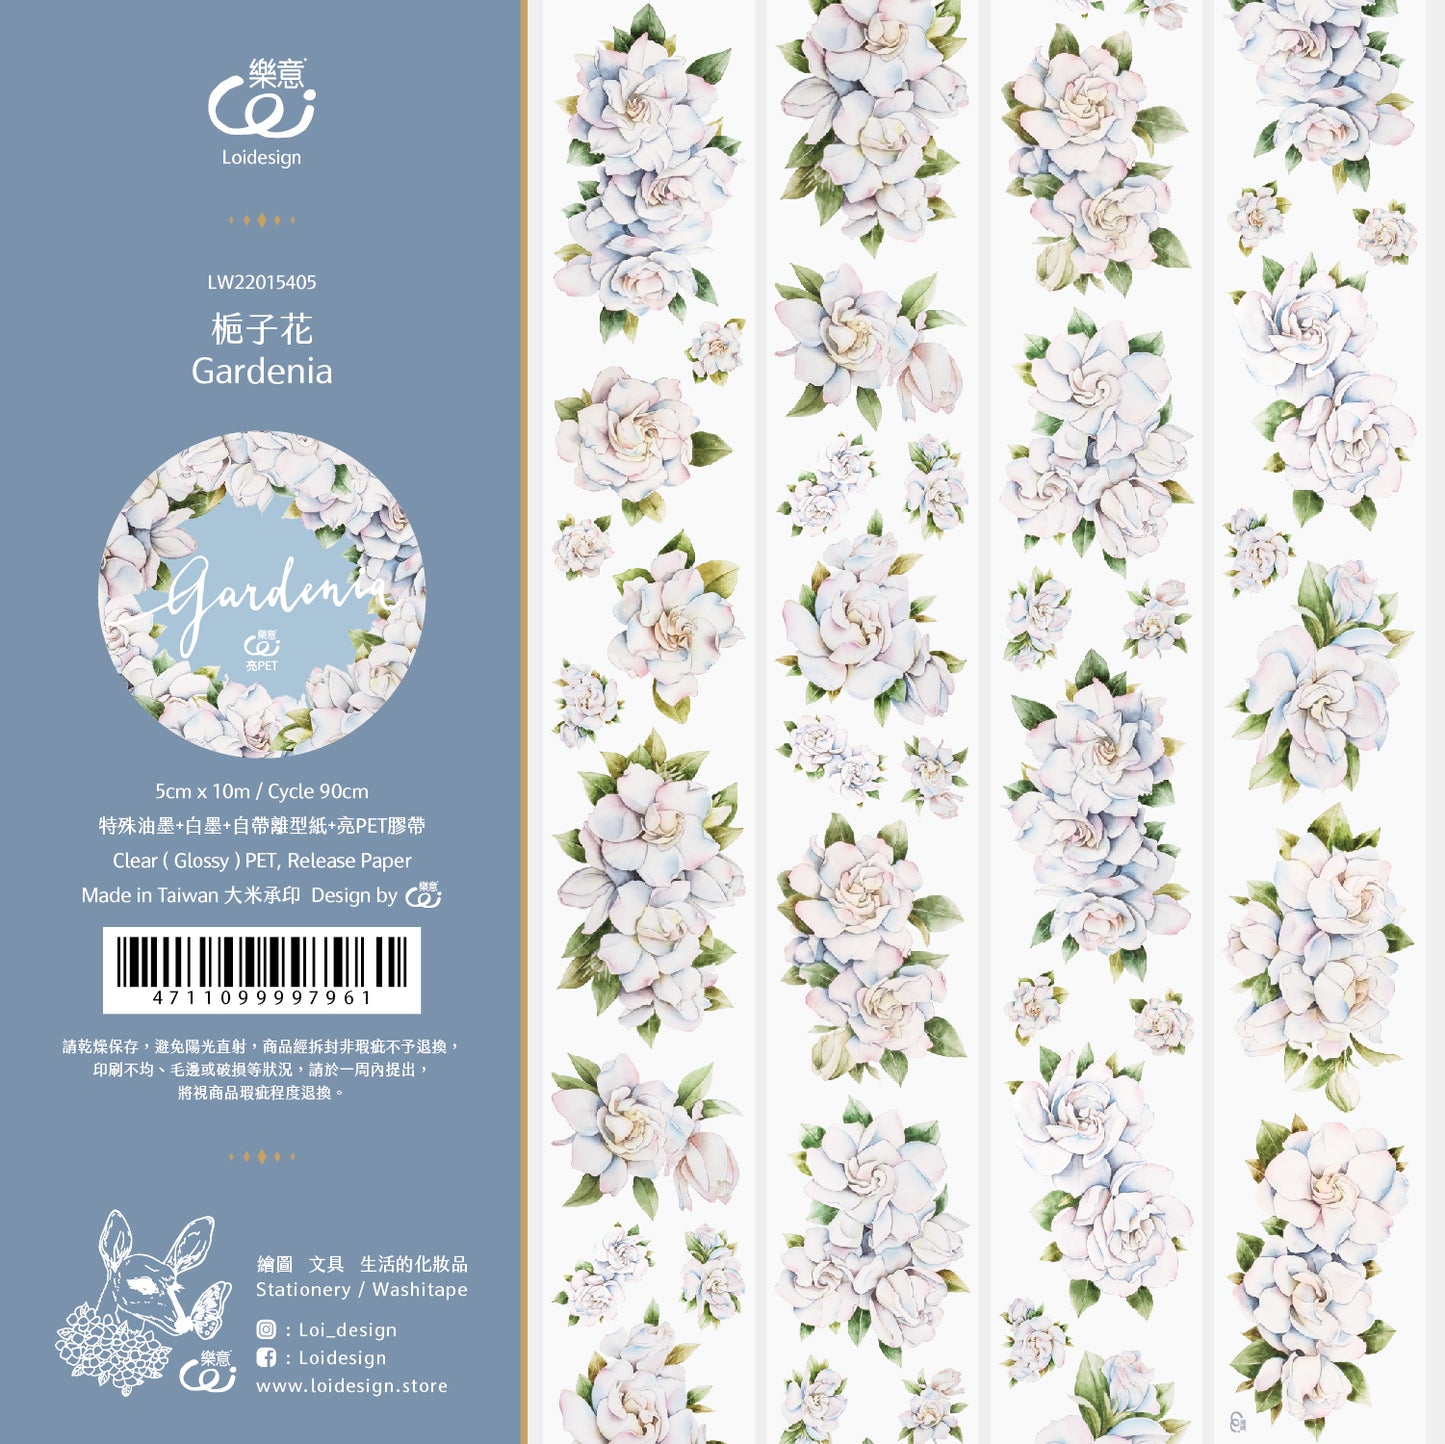 Loidesign Gardenia Glossy PET Tape